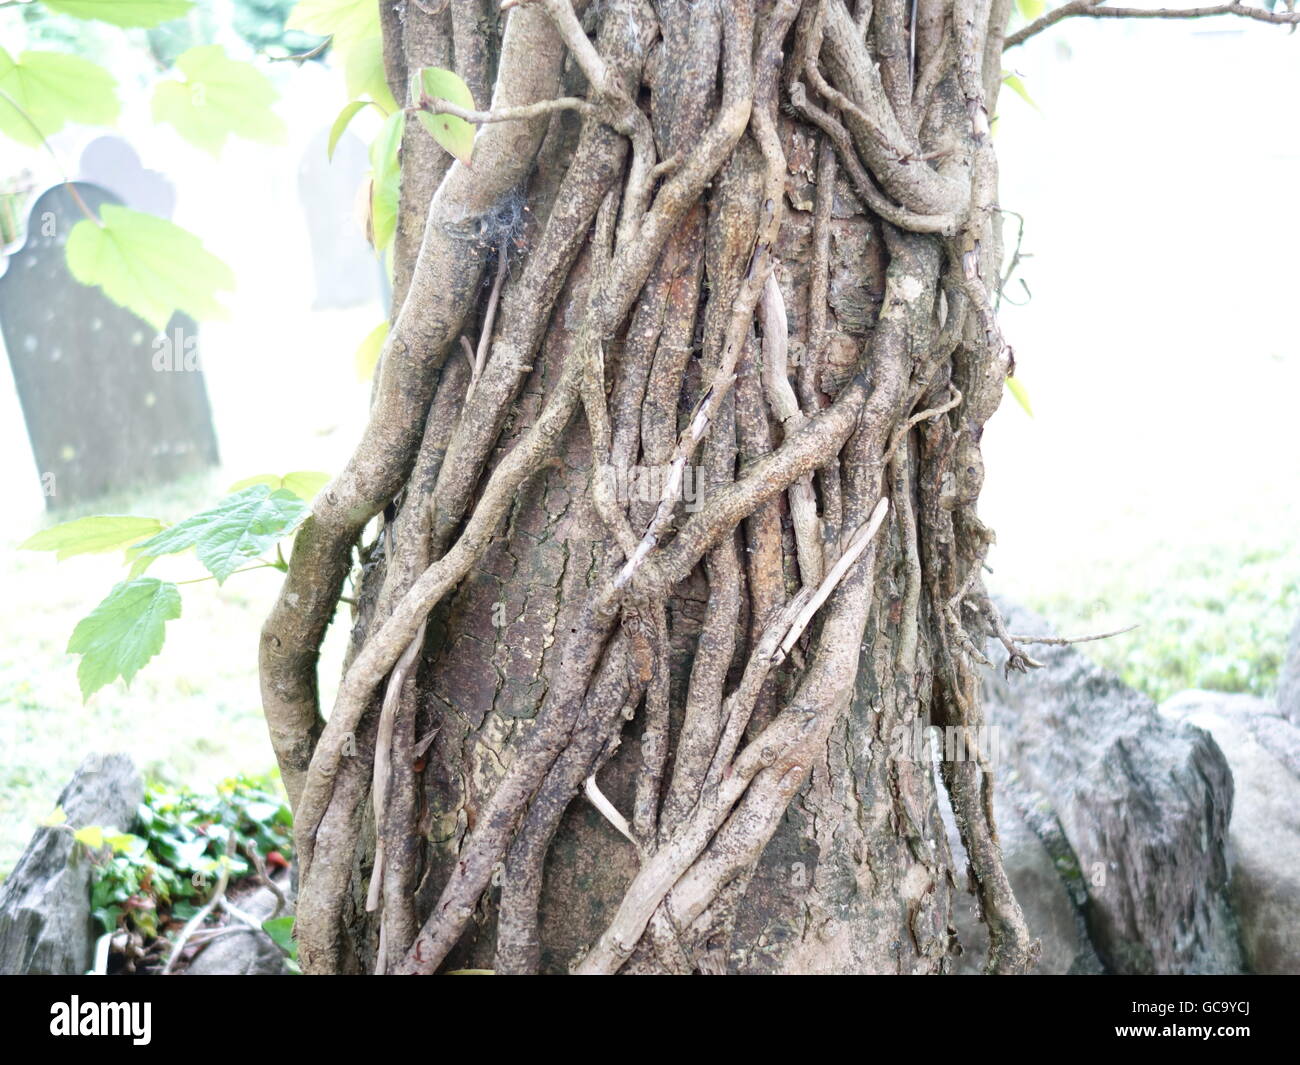 A tree strangled by vines. Stock Photo